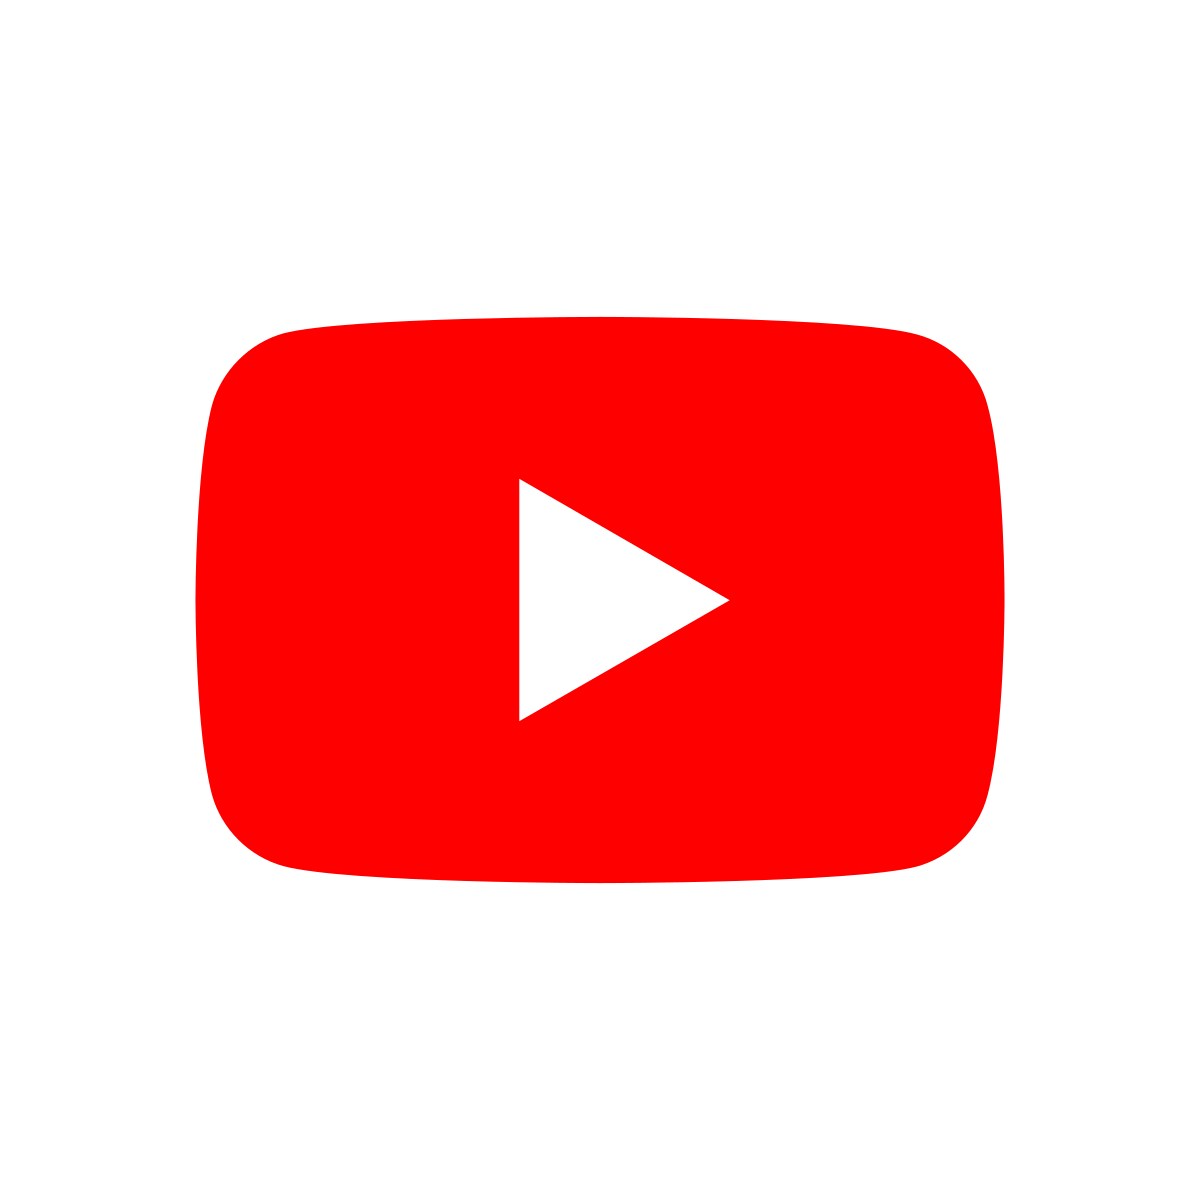 YouTubeに動画投稿したい方 動画編集します 簡単なYouTube投稿向けの動画編集 イメージ1